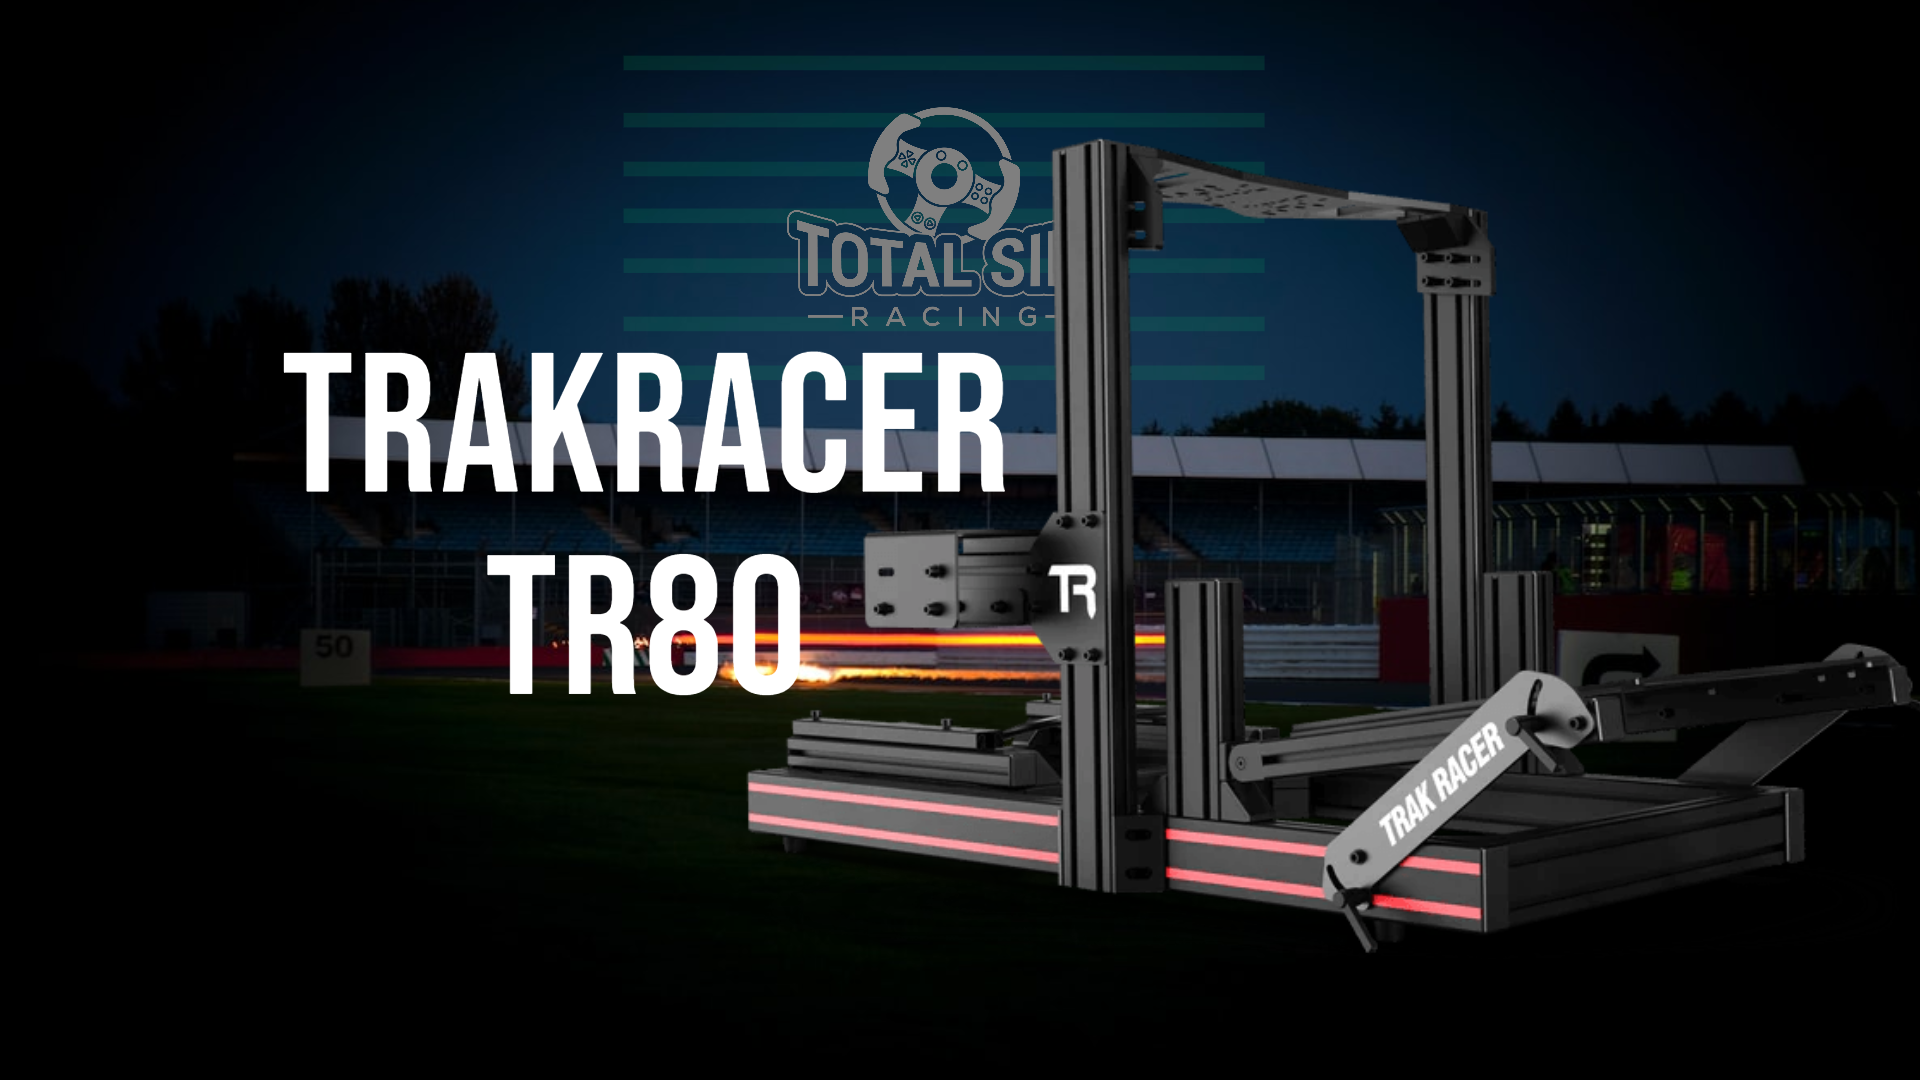 Trakracer TR80 MK5 Review